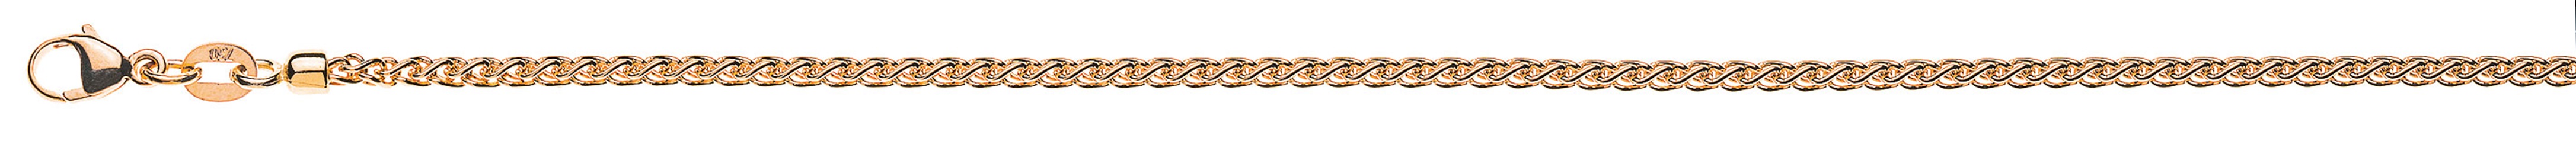 AURONOS Prestige Halskette Roségold 18K Zopfkette 60cm 2.15mm